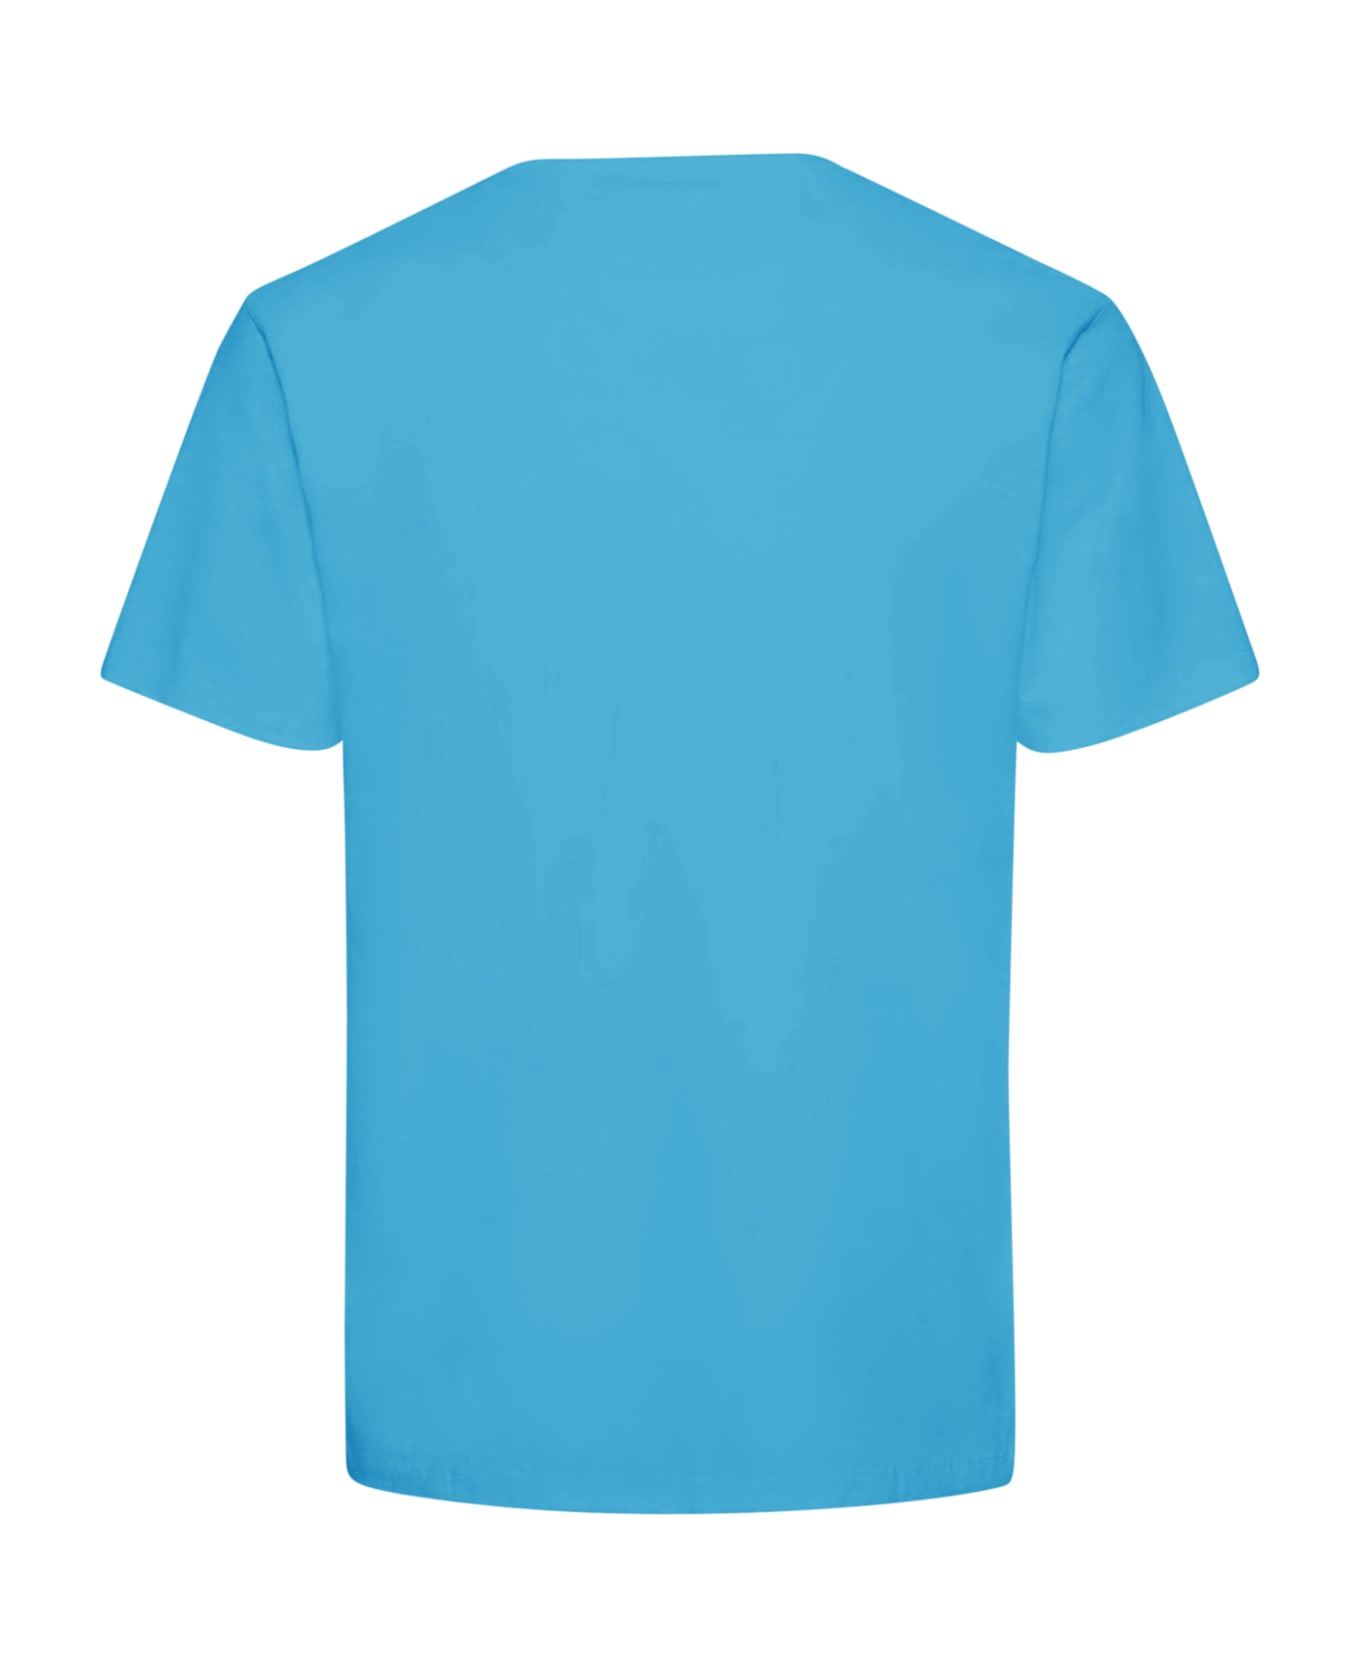 Maison Kitsuné Fox Head Patch Regular Tee Shirt - Enamel Blue